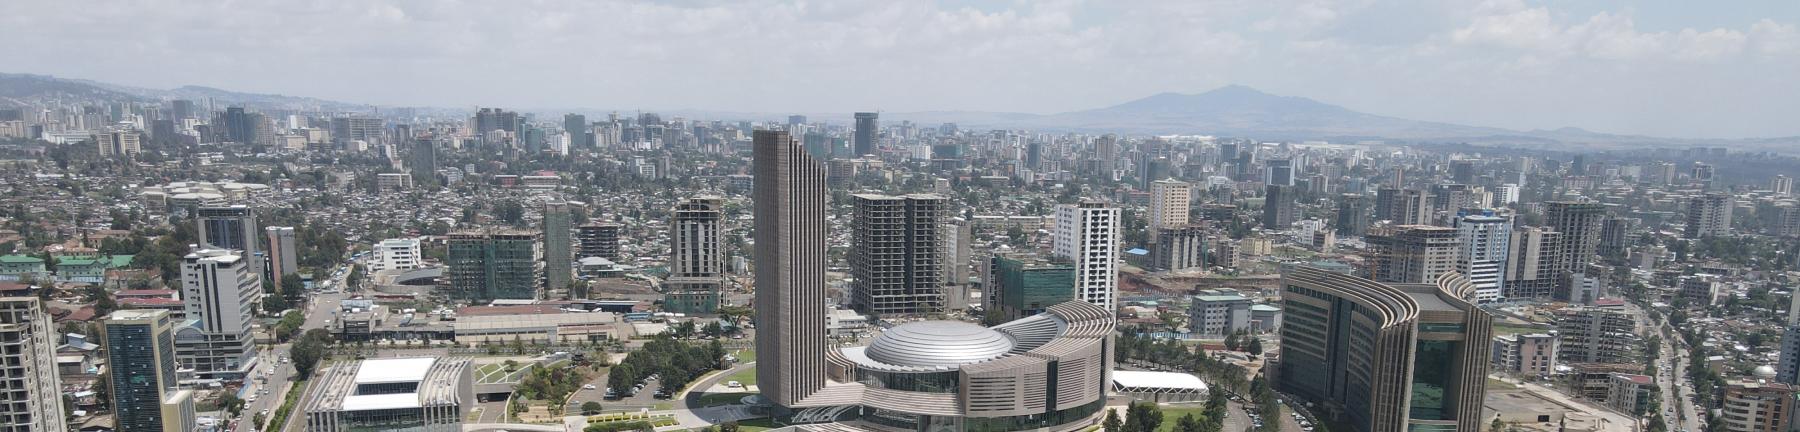 Addis Ababa cityscape